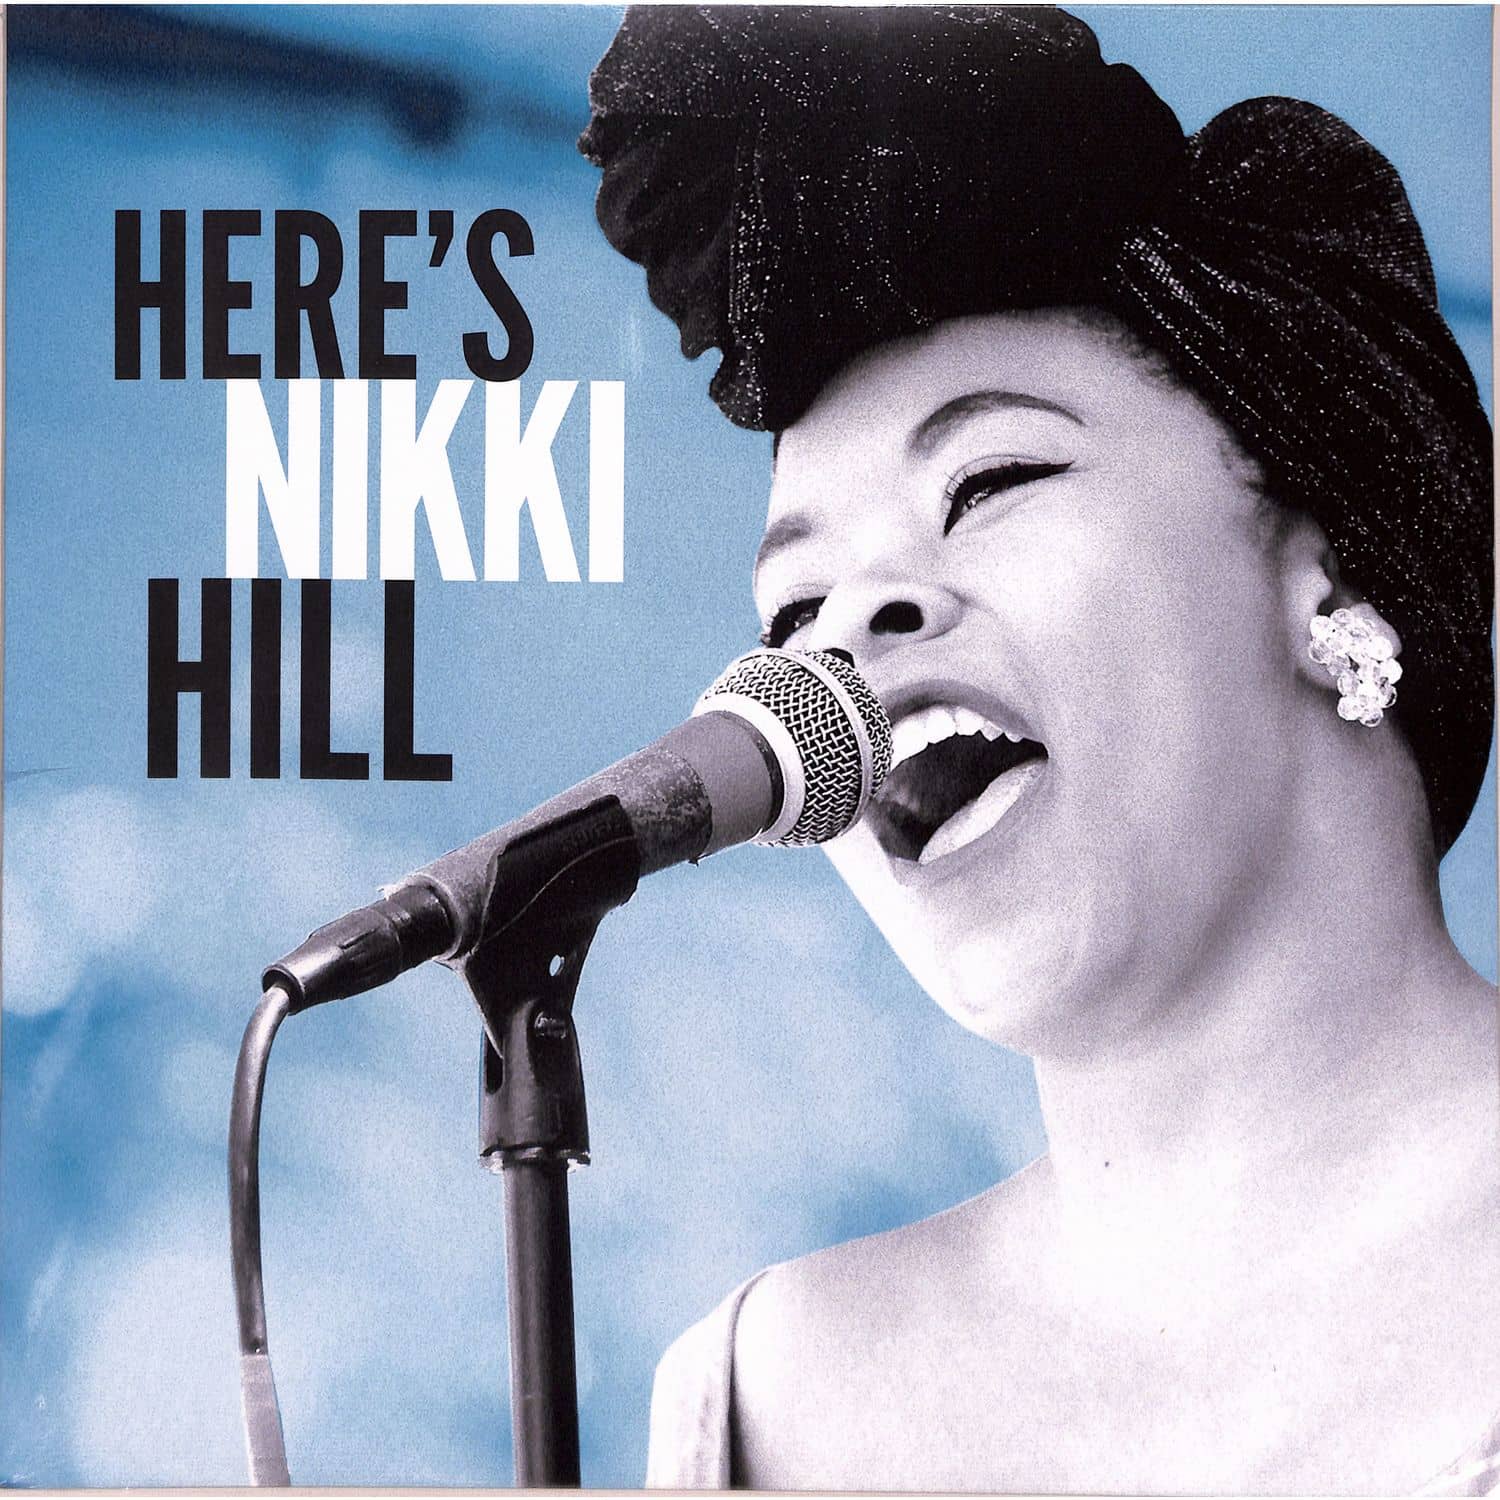 Nikki Hill - HERE S NIKKI HILL 